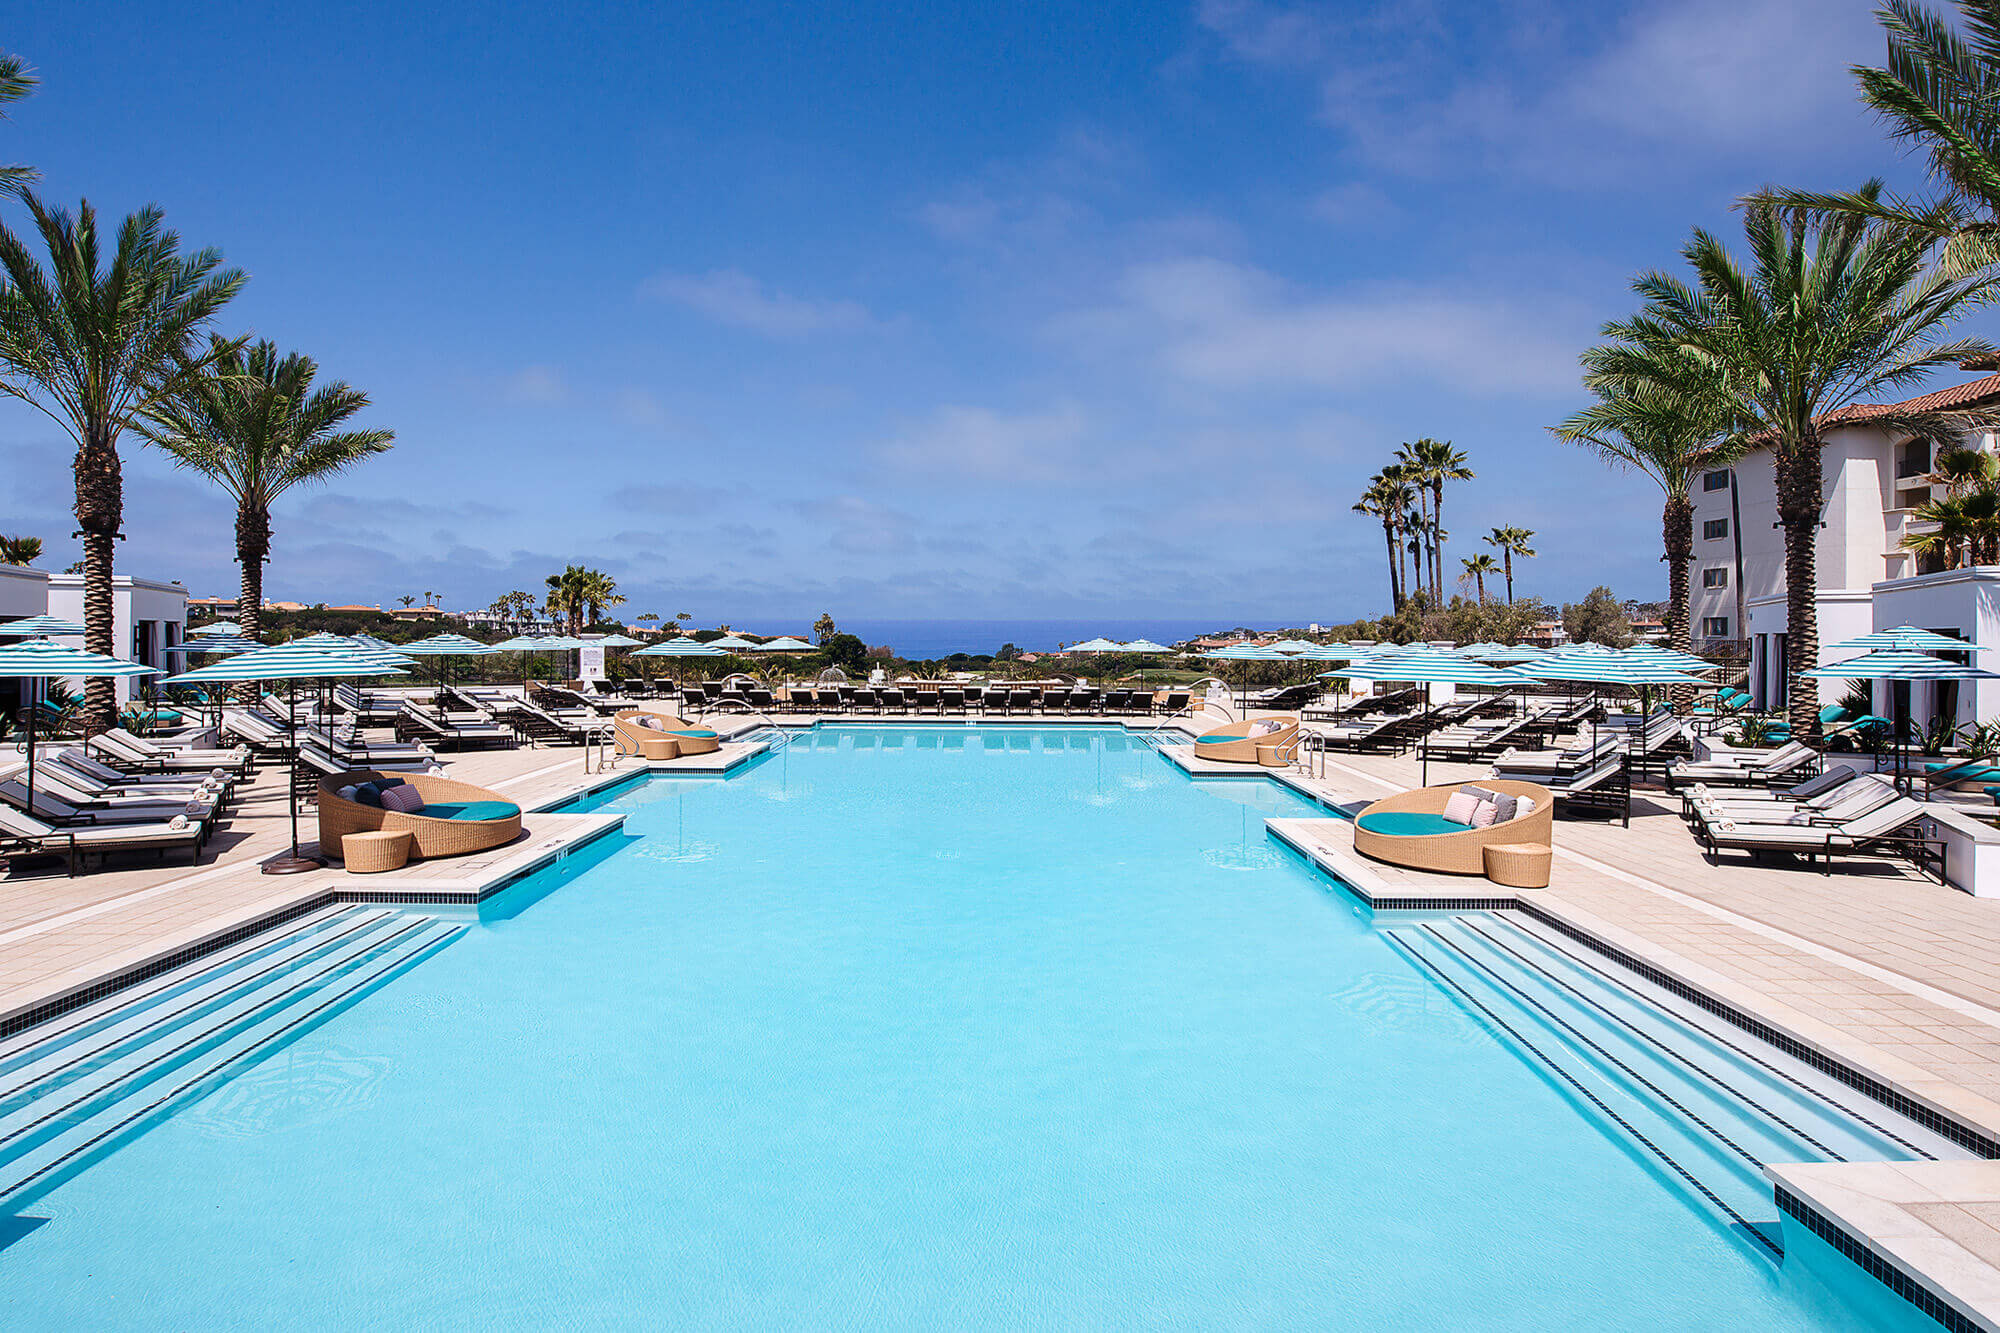 The Best Beach Hotels In Orange County